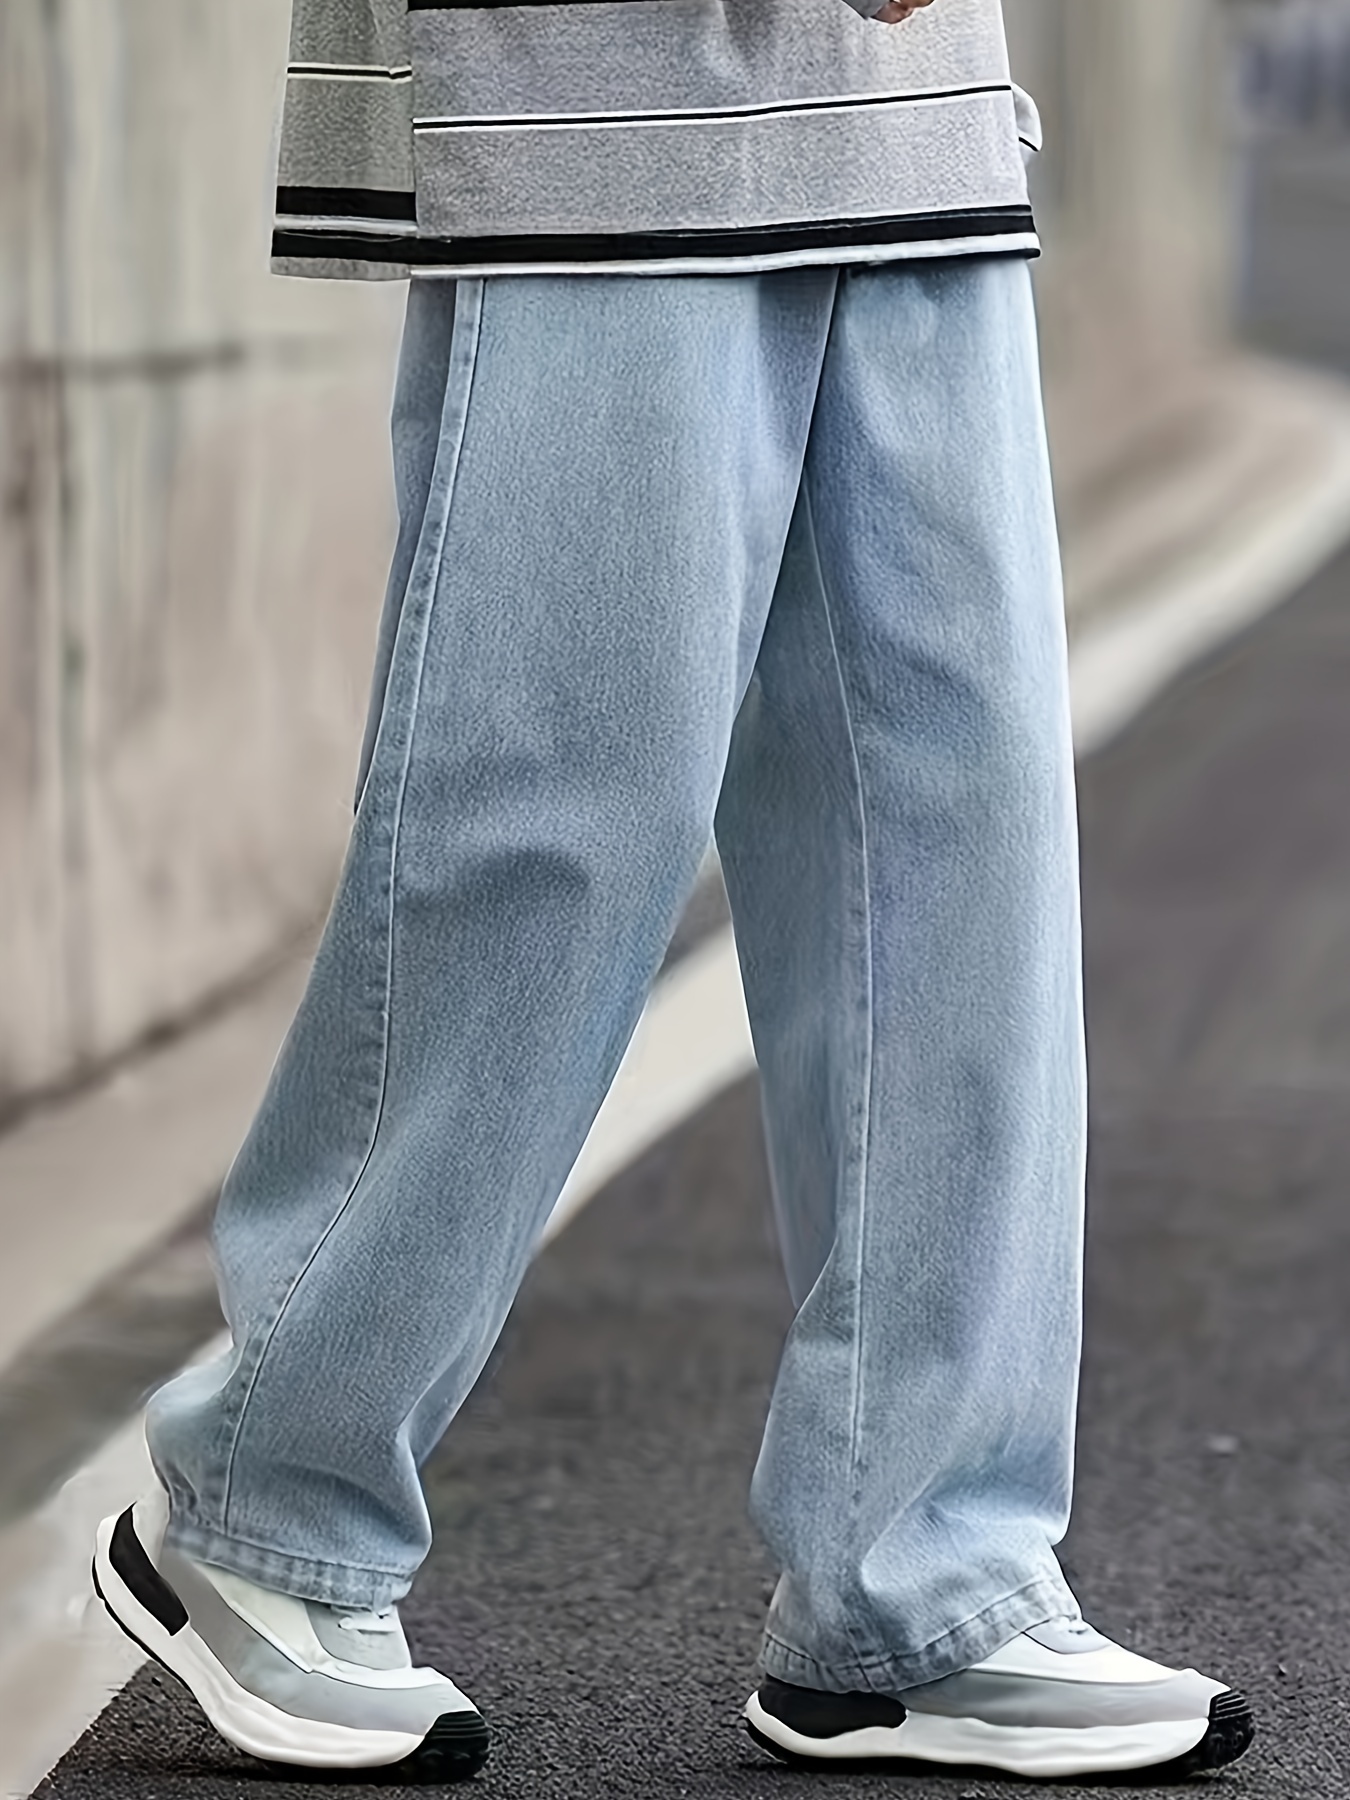 graffiti print jeans high Street Jeans Men Black Stretch Slim Fit